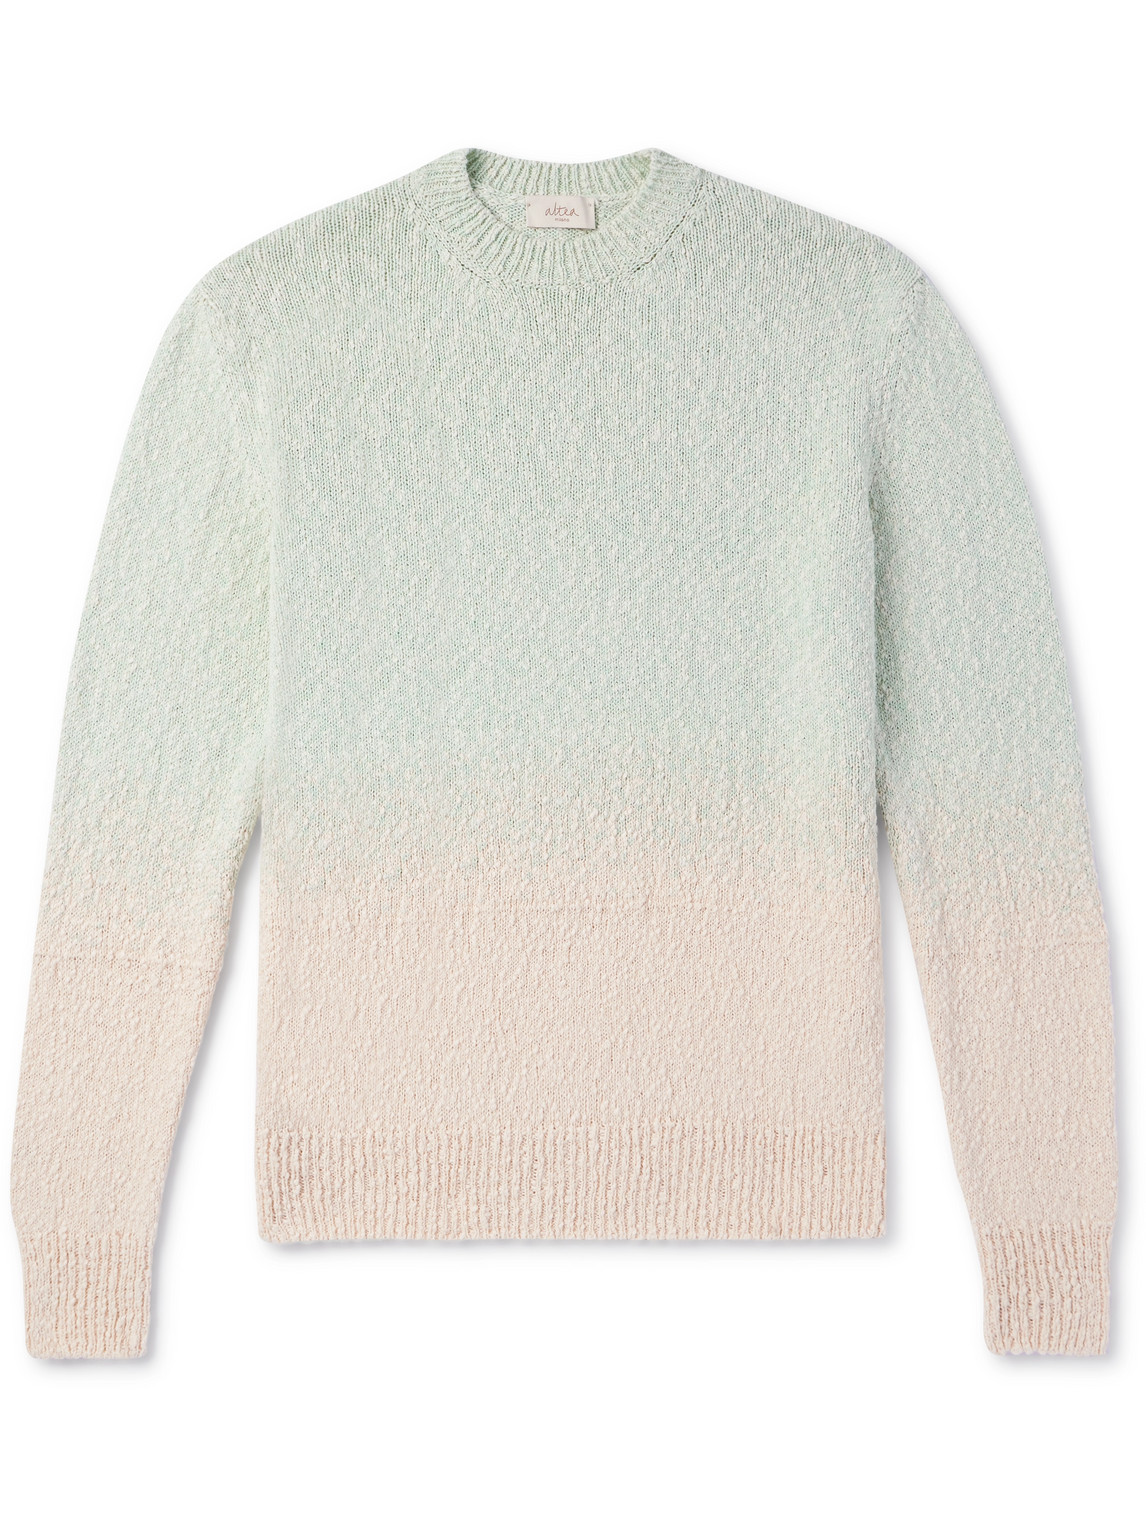 Altea Crocheted Cotton Sweater In Green